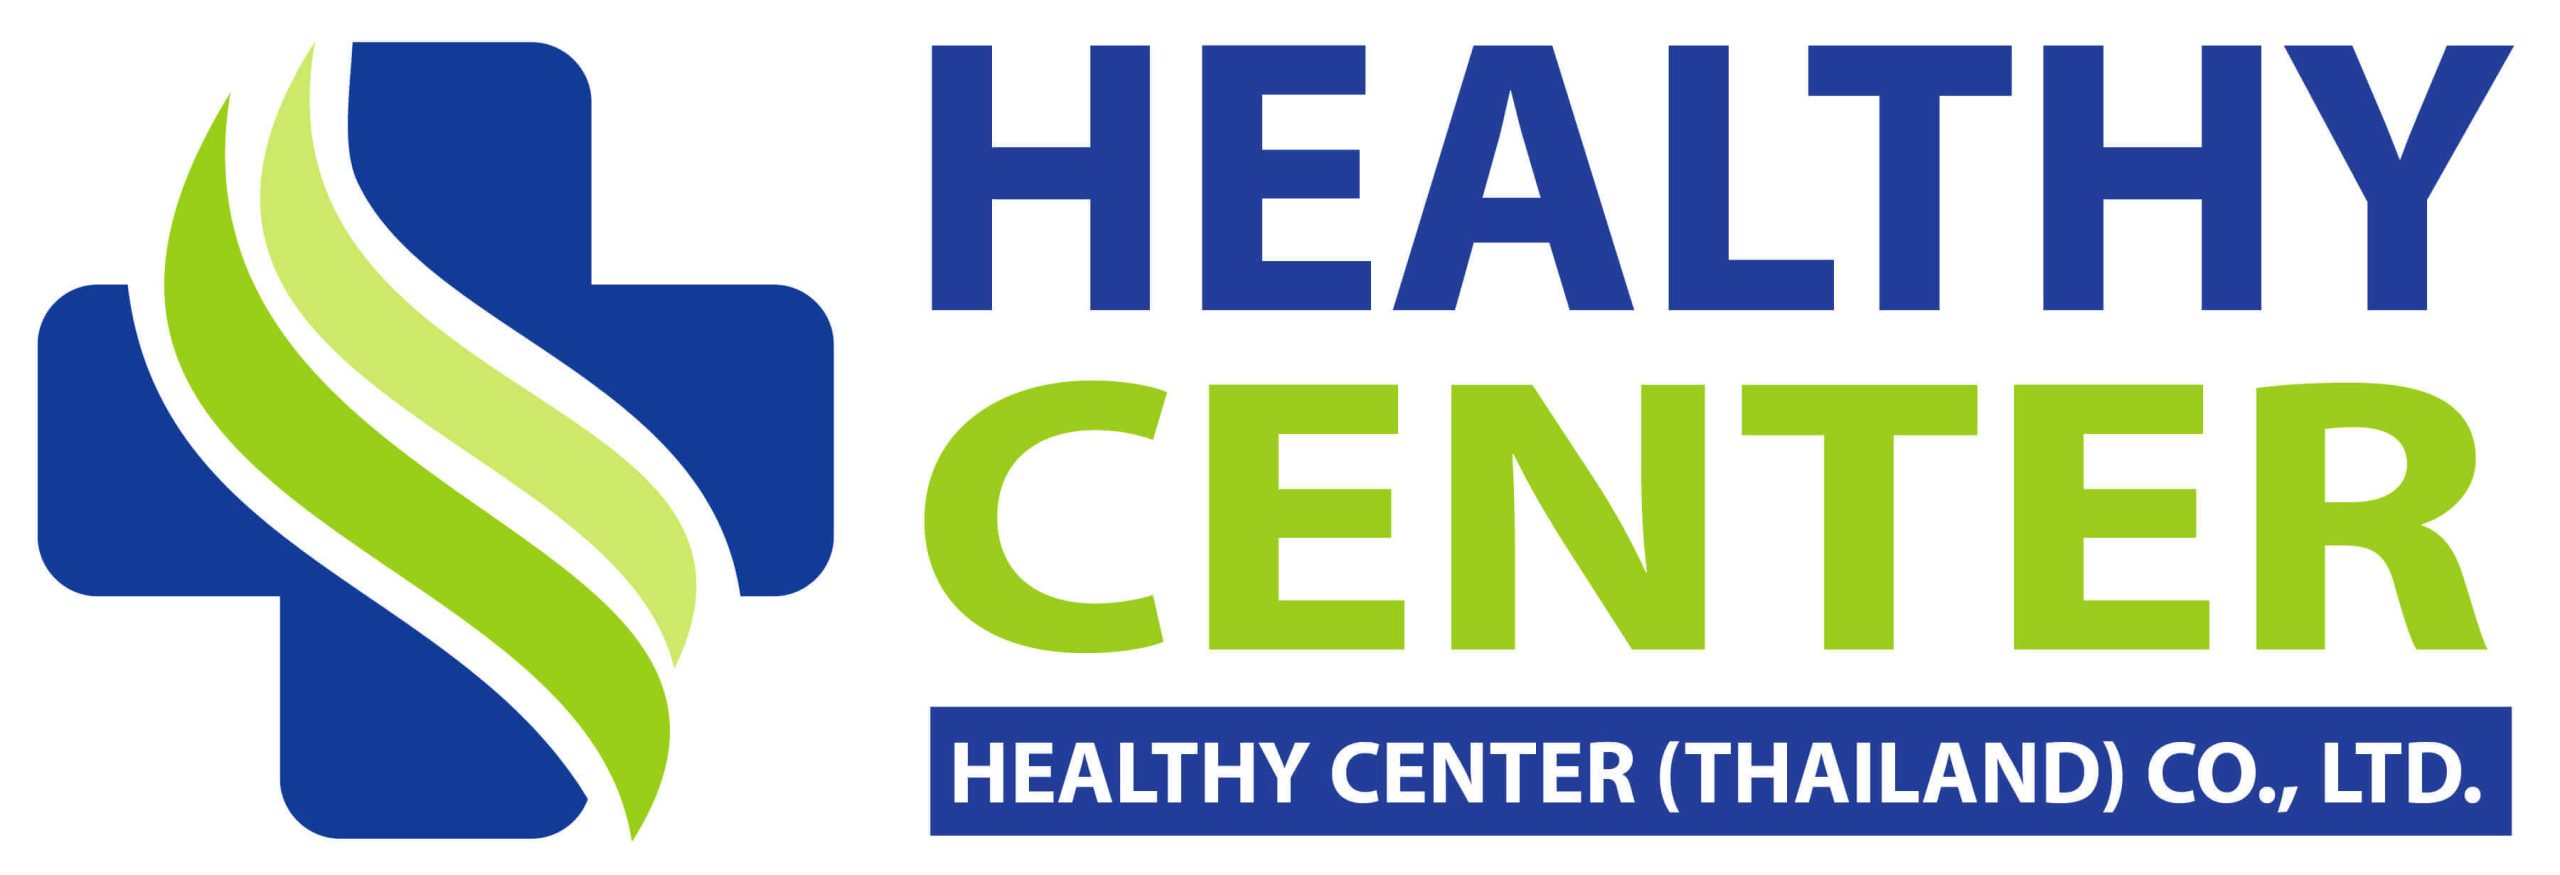 healthycenter-logo